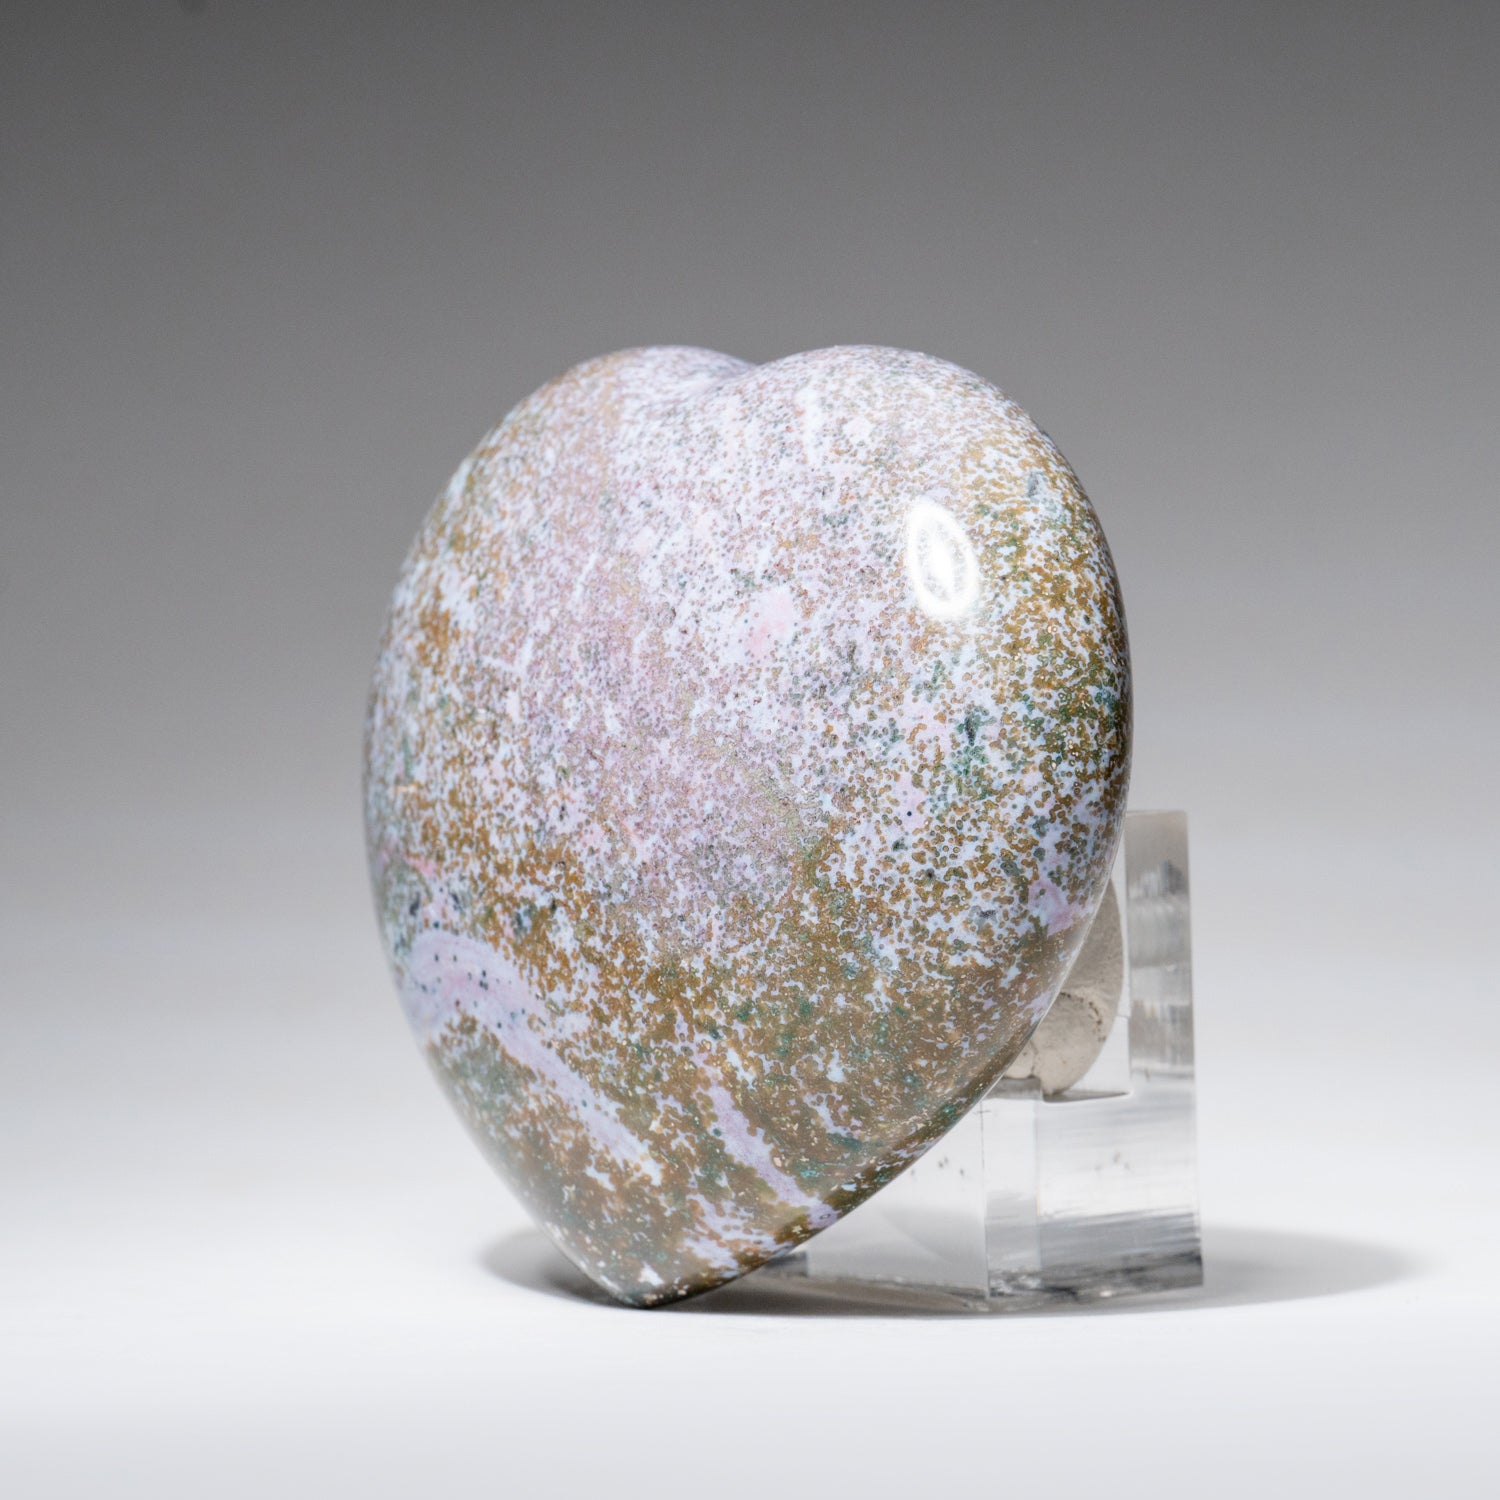 Polished Ocean Jasper Heart from Madagascar (368 grams)